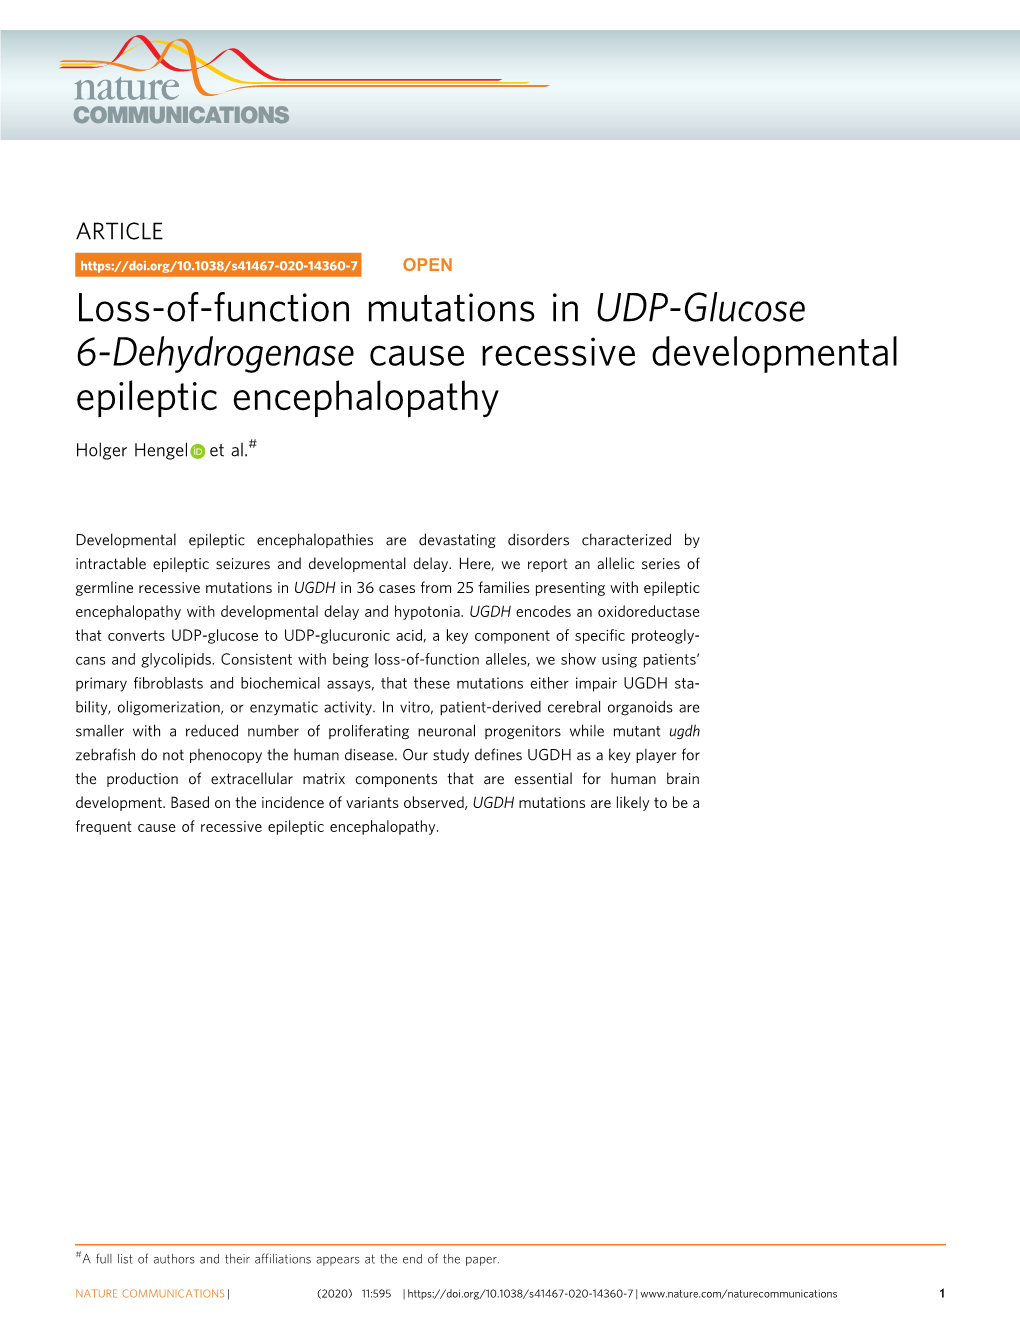 Loss-Of-Function Mutations in UDP-Glucose 6-Dehydrogenase Cause Recessive Developmental Epileptic Encephalopathy